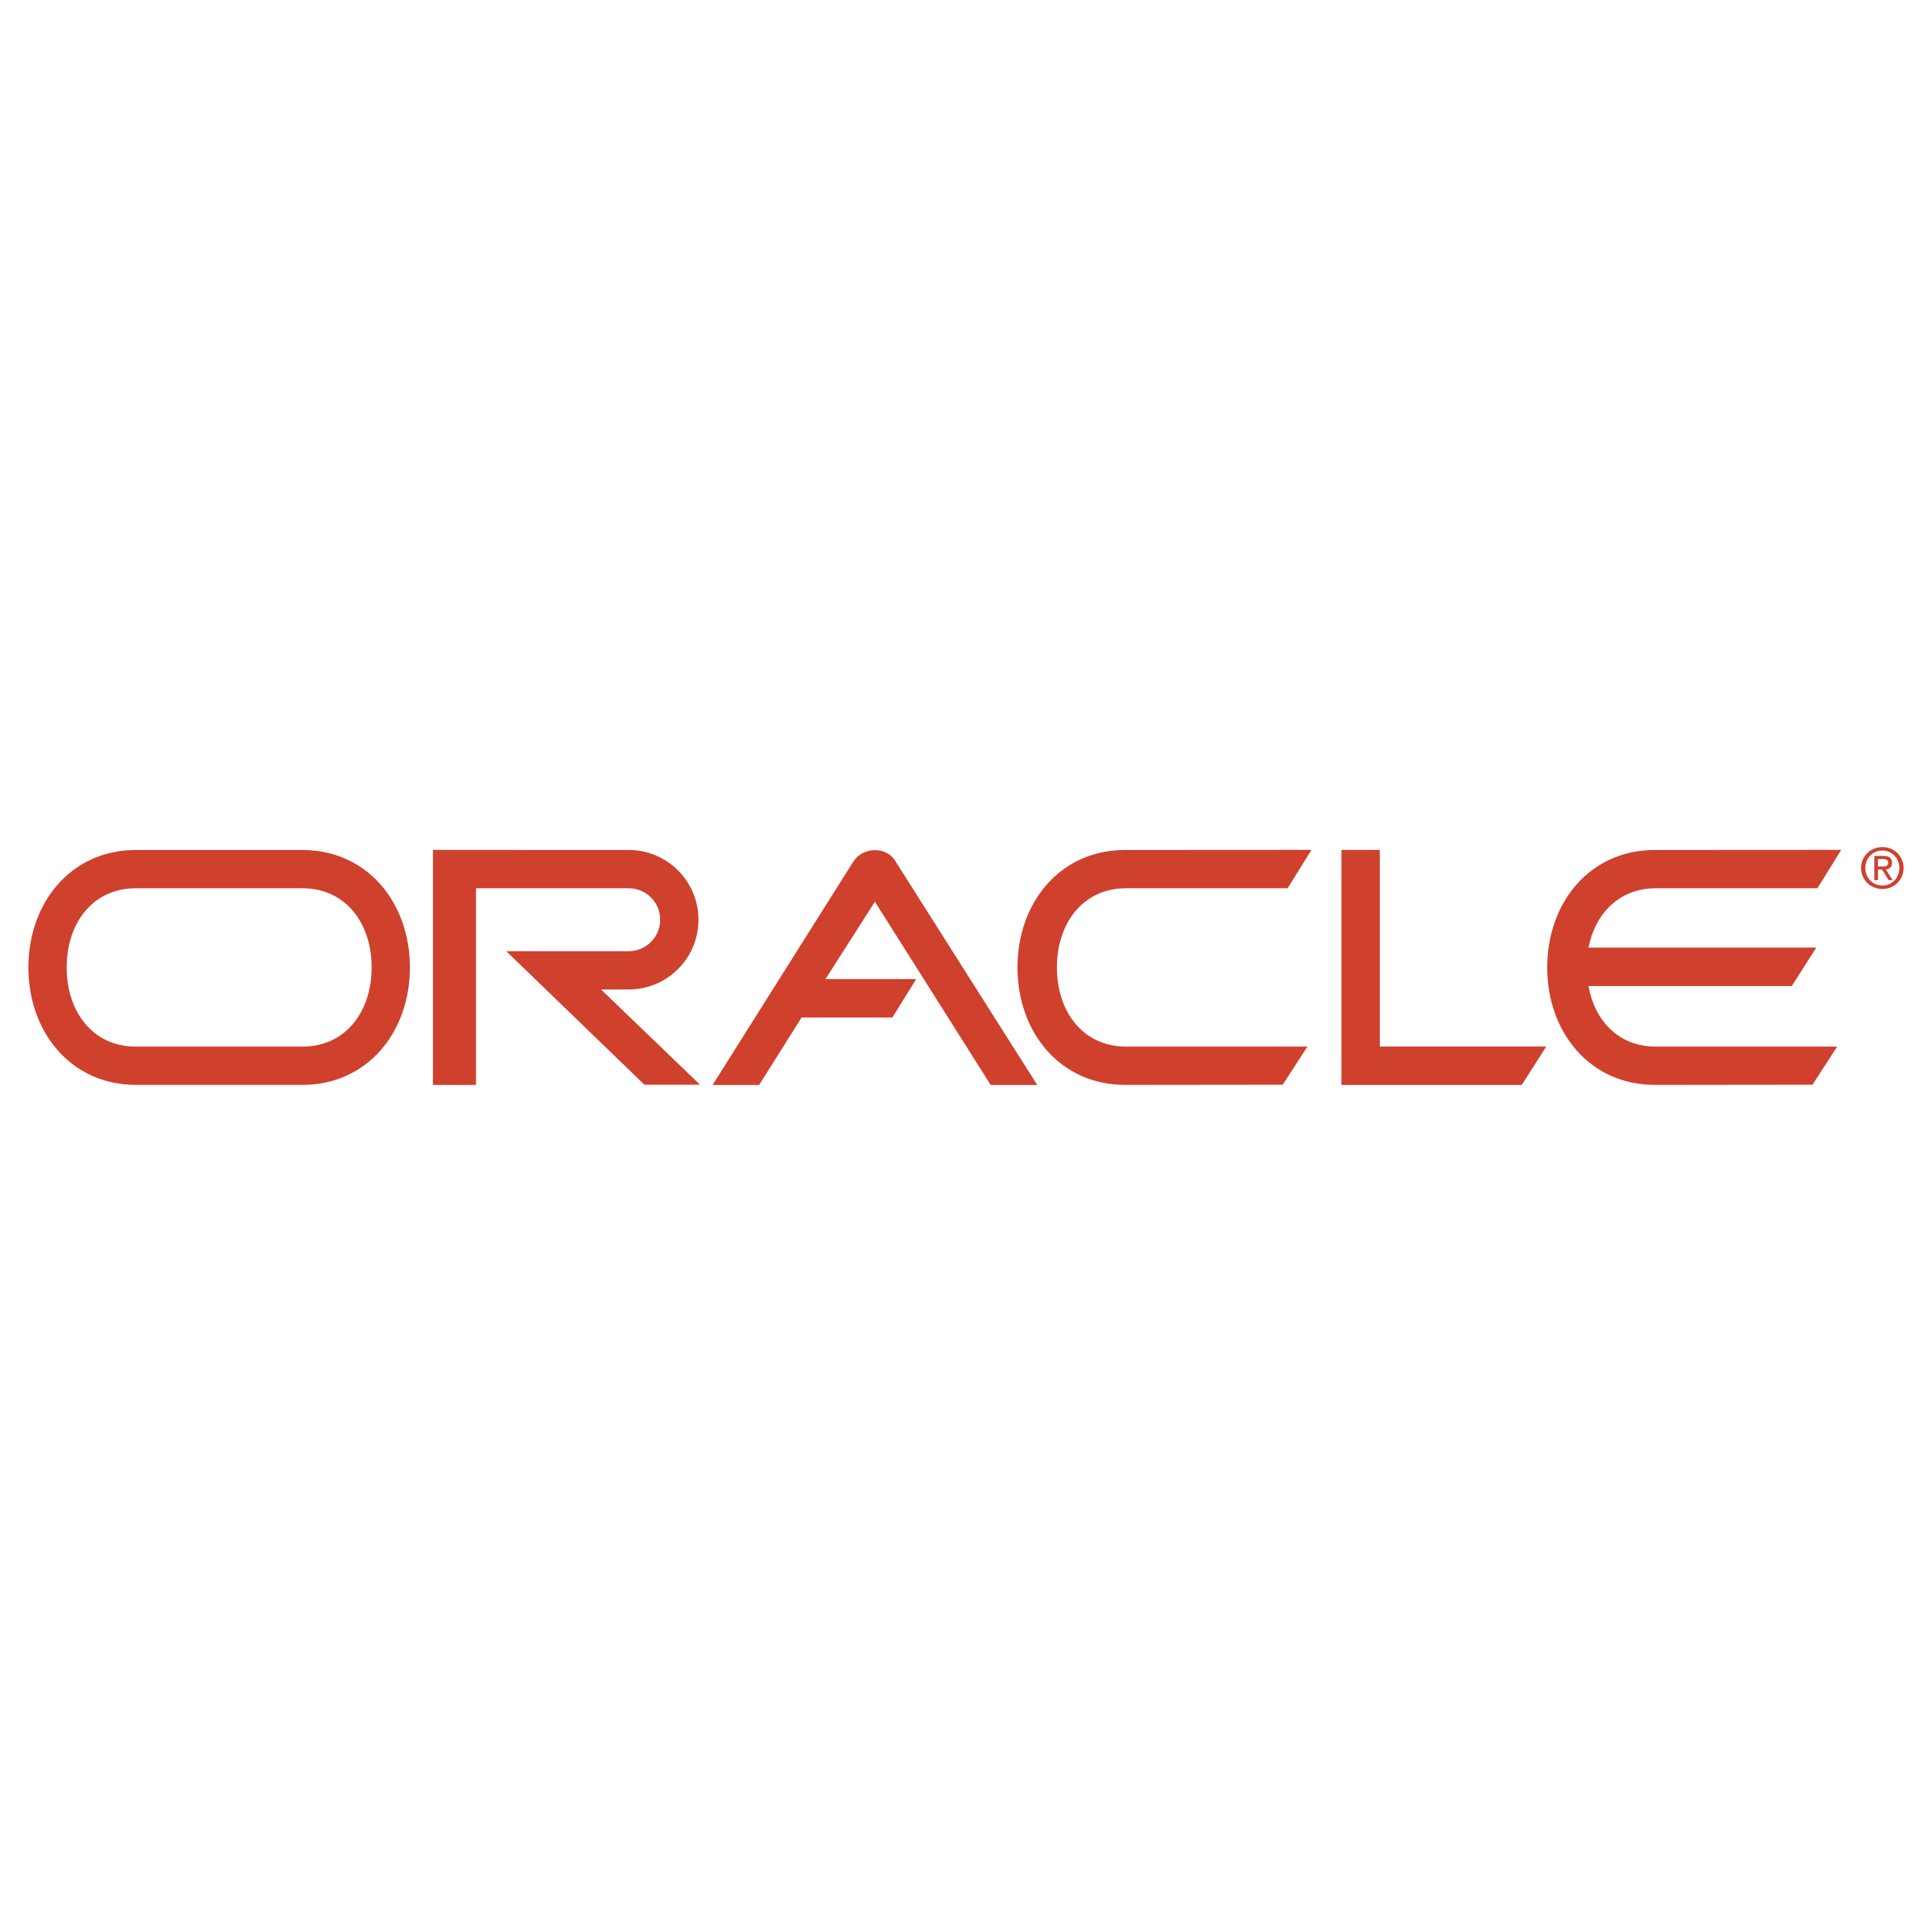 Google Oracle Logo - Oracle Logo PNG Transparent & SVG Vector - Freebie Supply